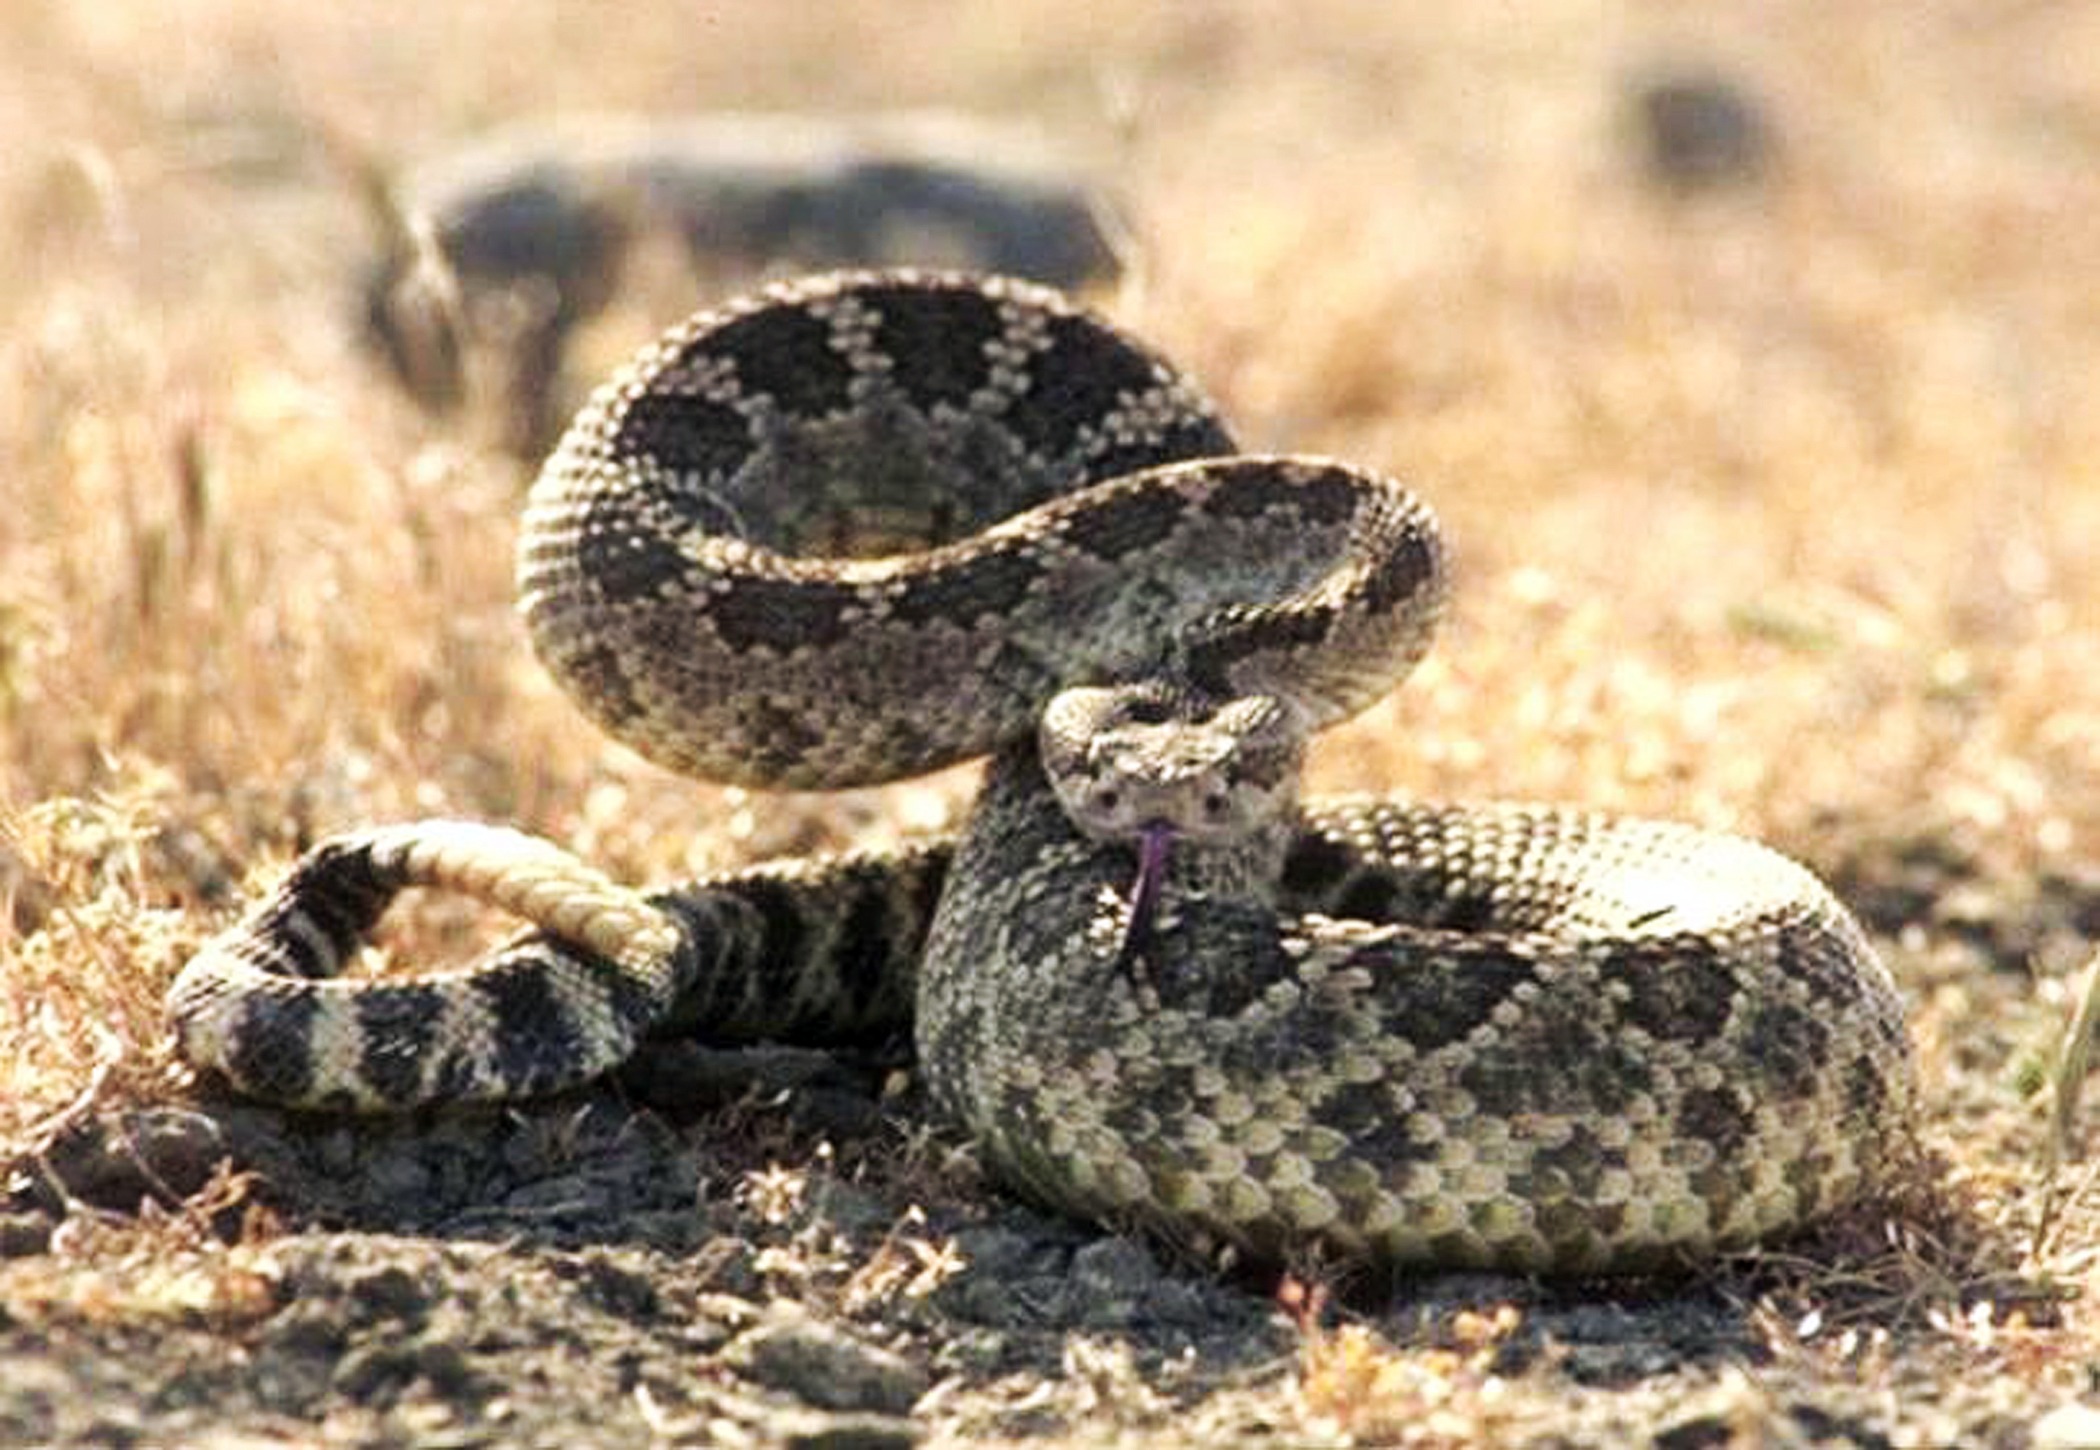 Wild snake photo